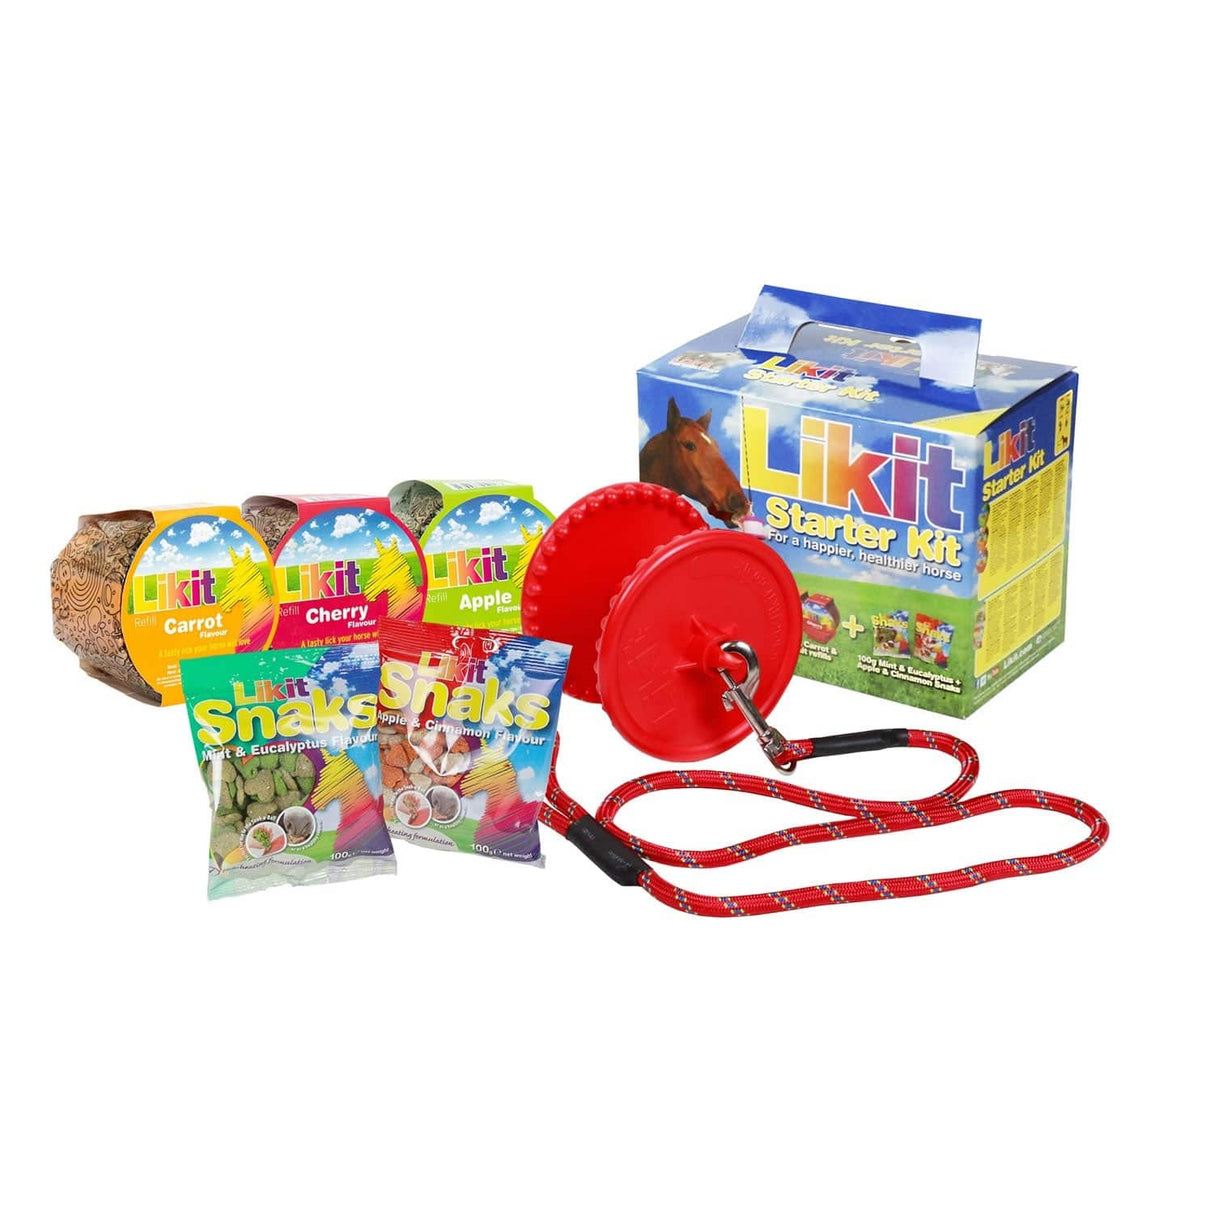 Likit Starter Kits Horse Licks Treats and Toys Clear Glitter Barnstaple Equestrian Supplies